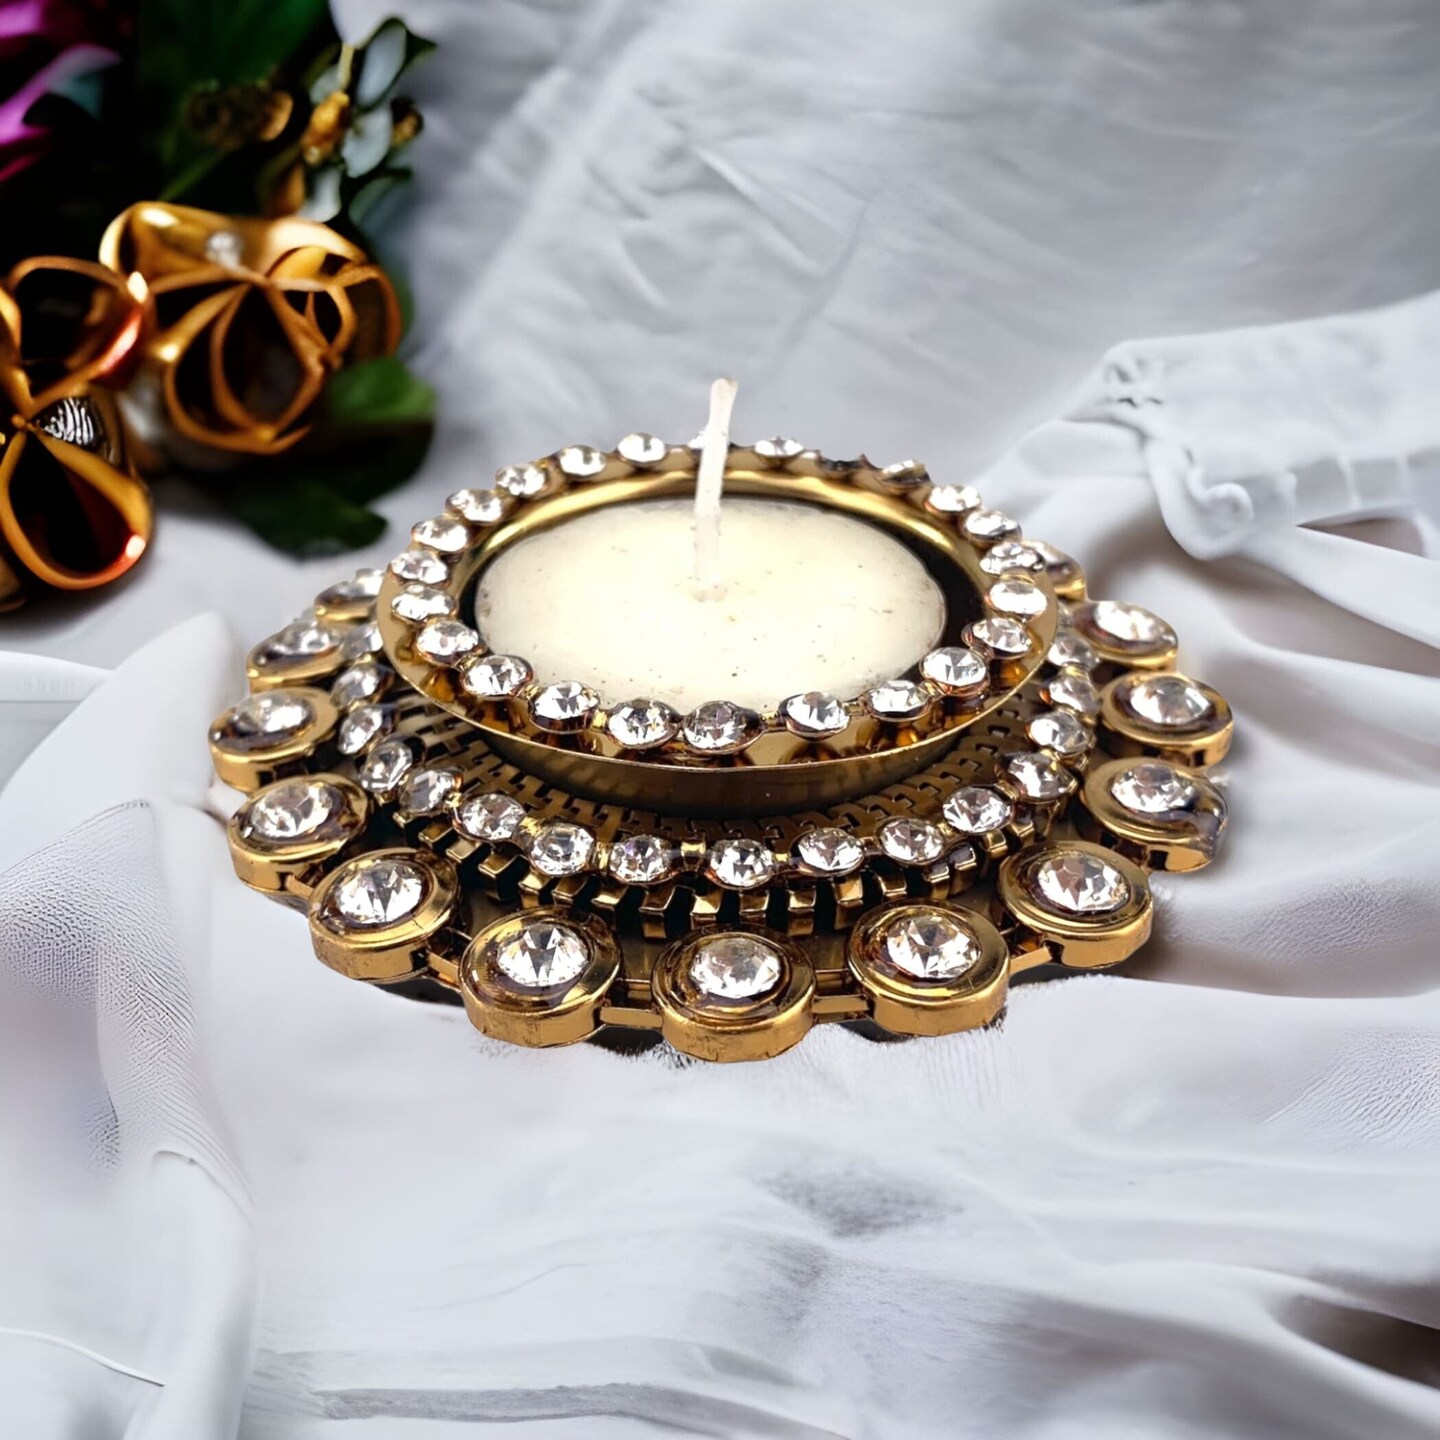 Candle Holder t Light Holder Candle Stand Tealight Diwali Diya Holders For Indian Festival Decorations Lighting Accessories Navrathri Varalaxmi Wedding Pooja Home New Year Decor